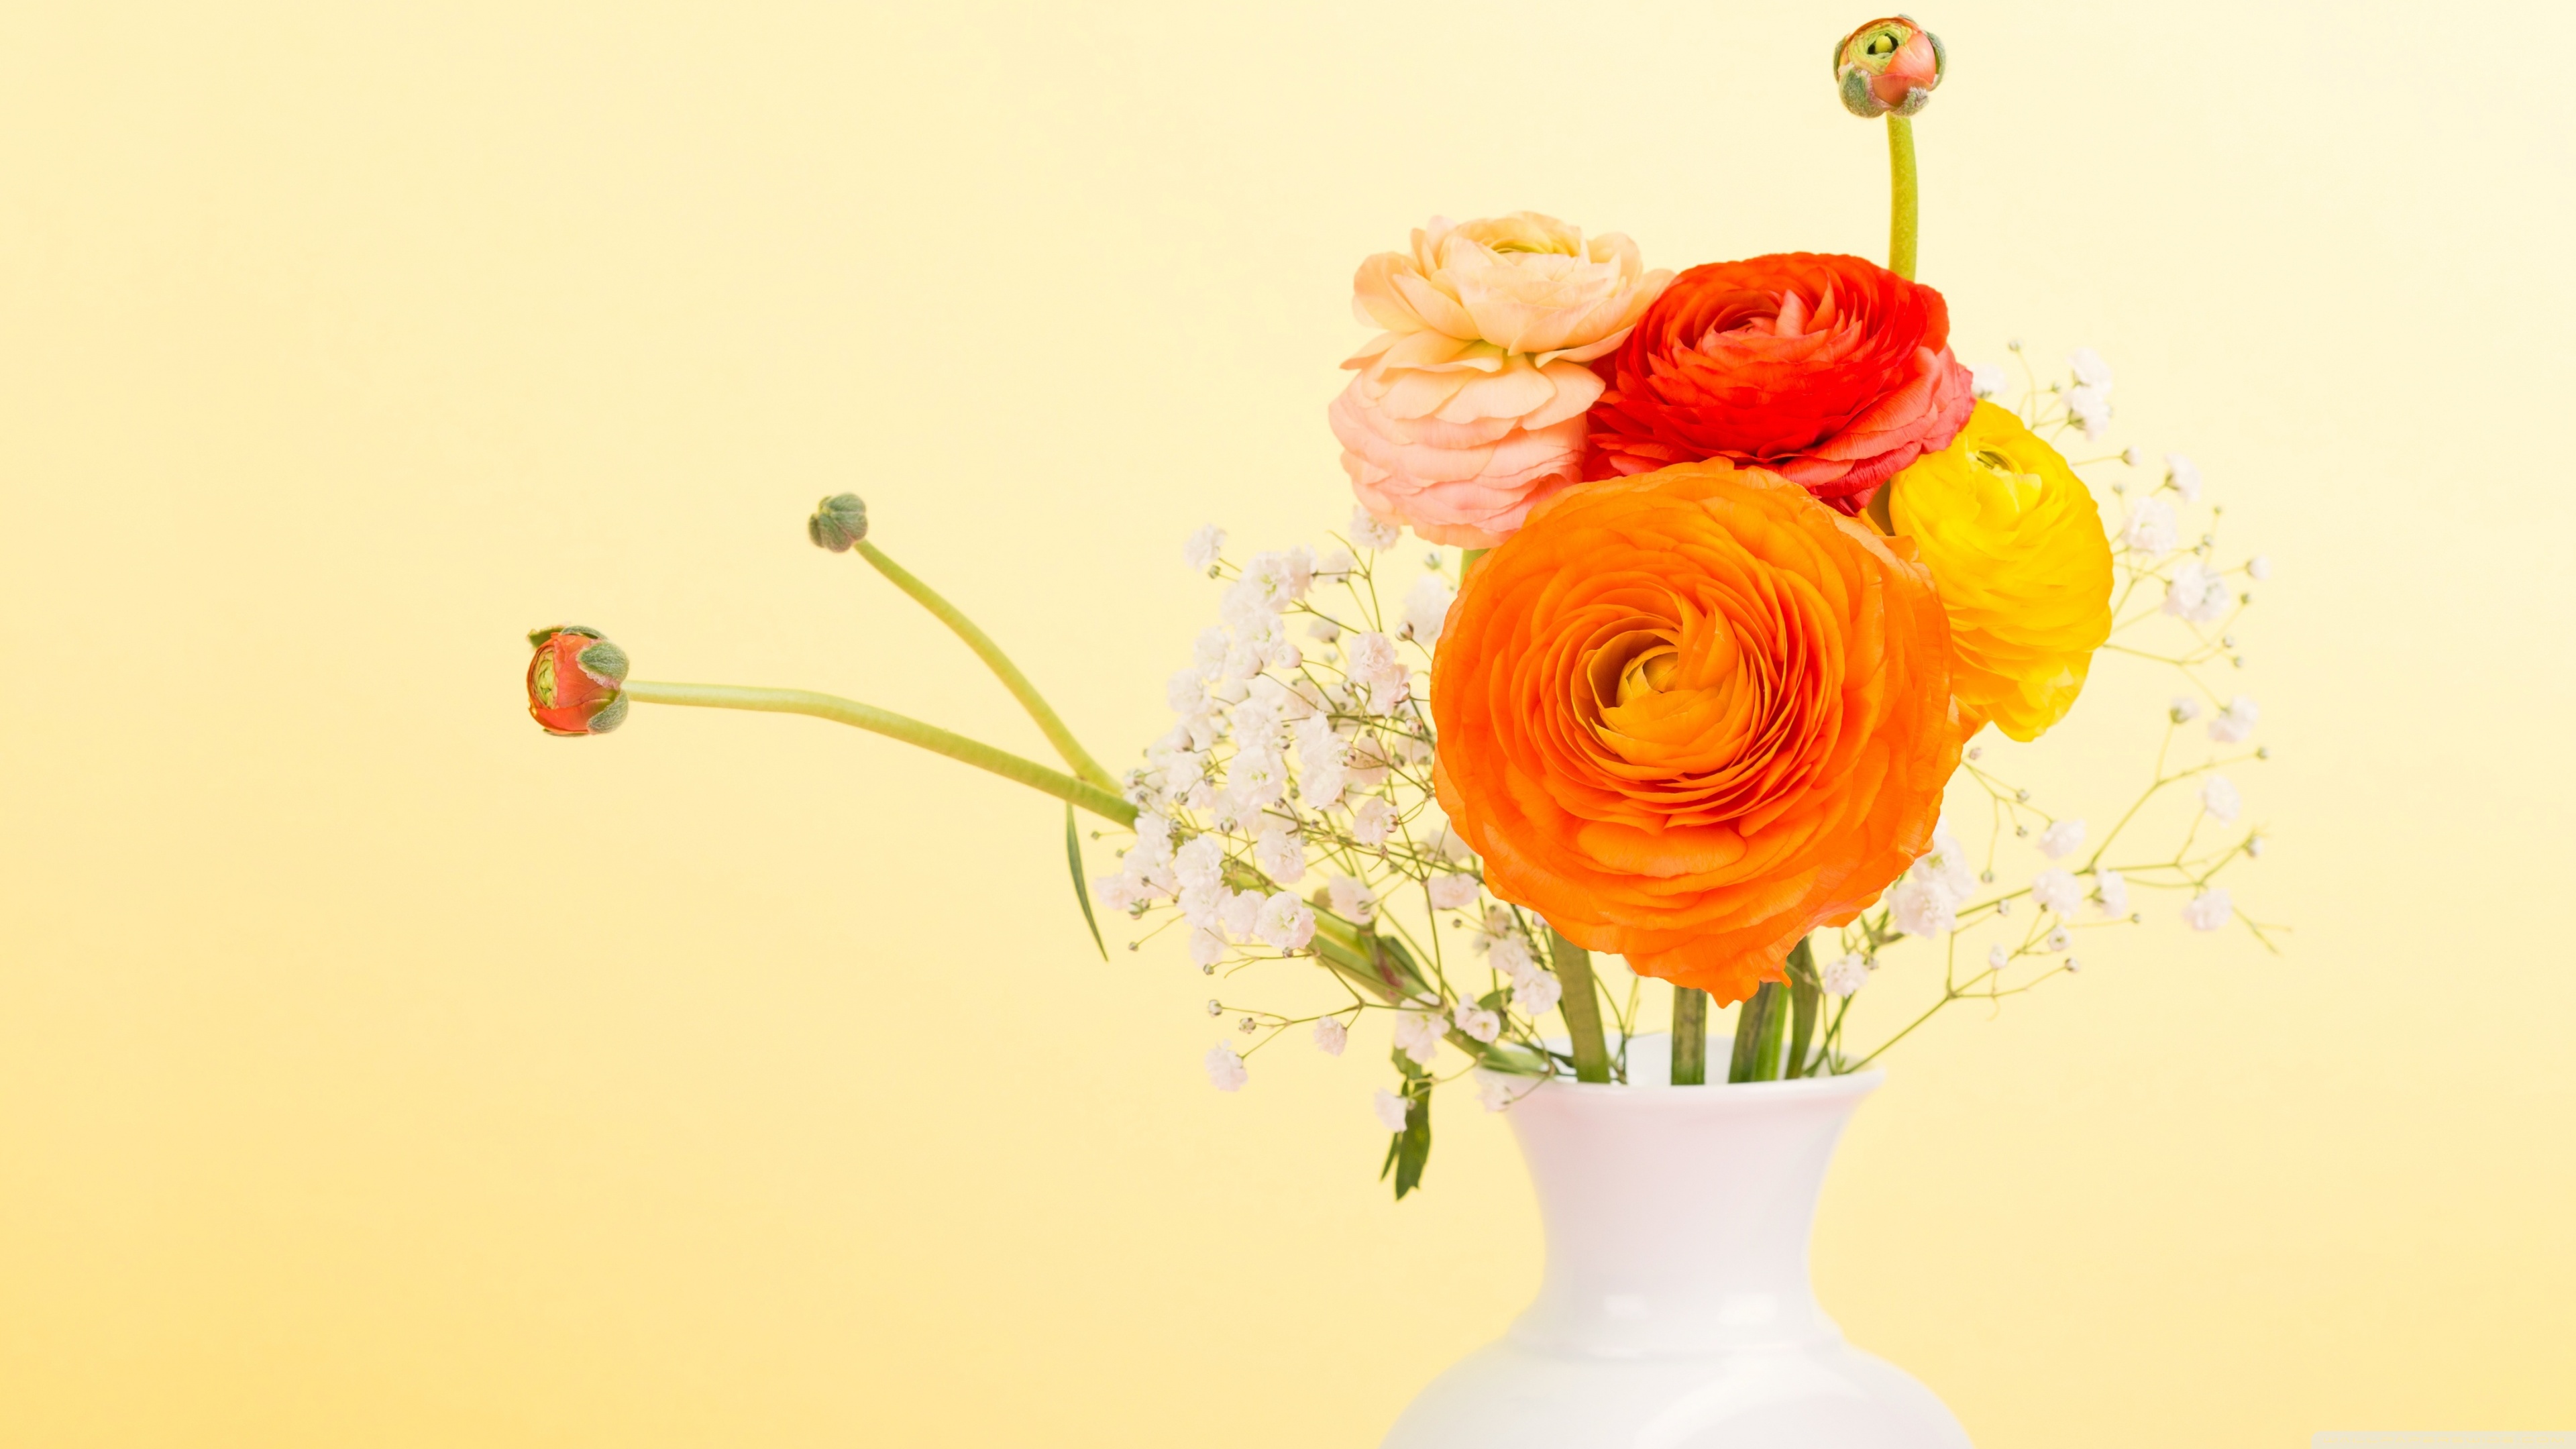 colorful, man made, flower, buttercup, orange flower, vase